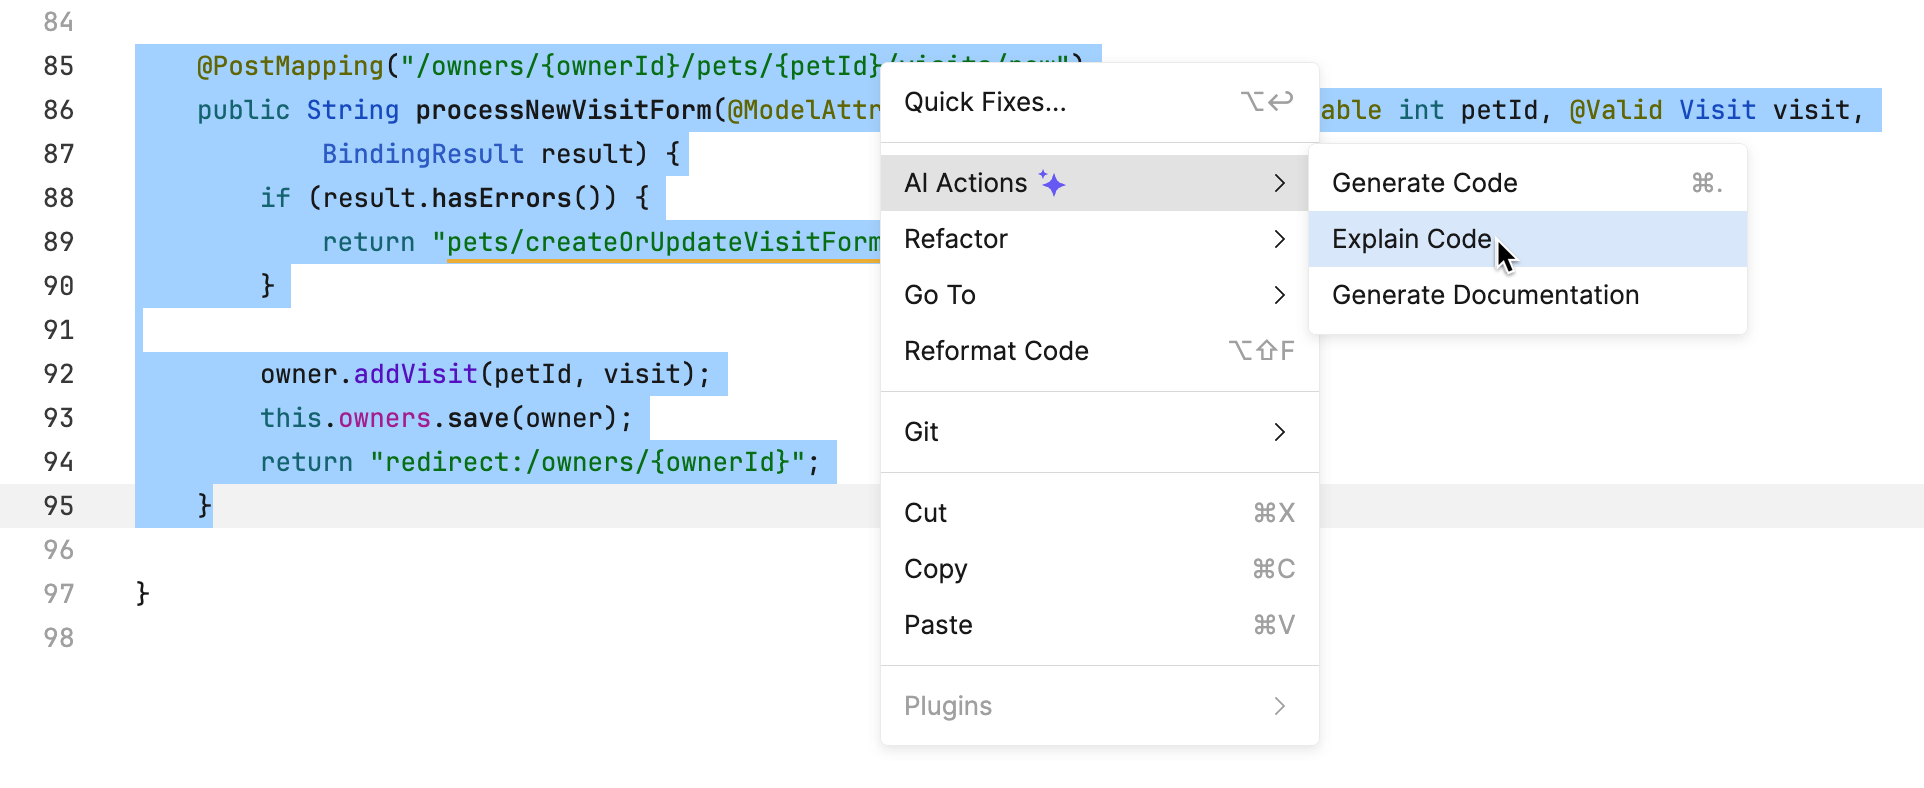 Context menu for selected code block with 'Explain code' item in it